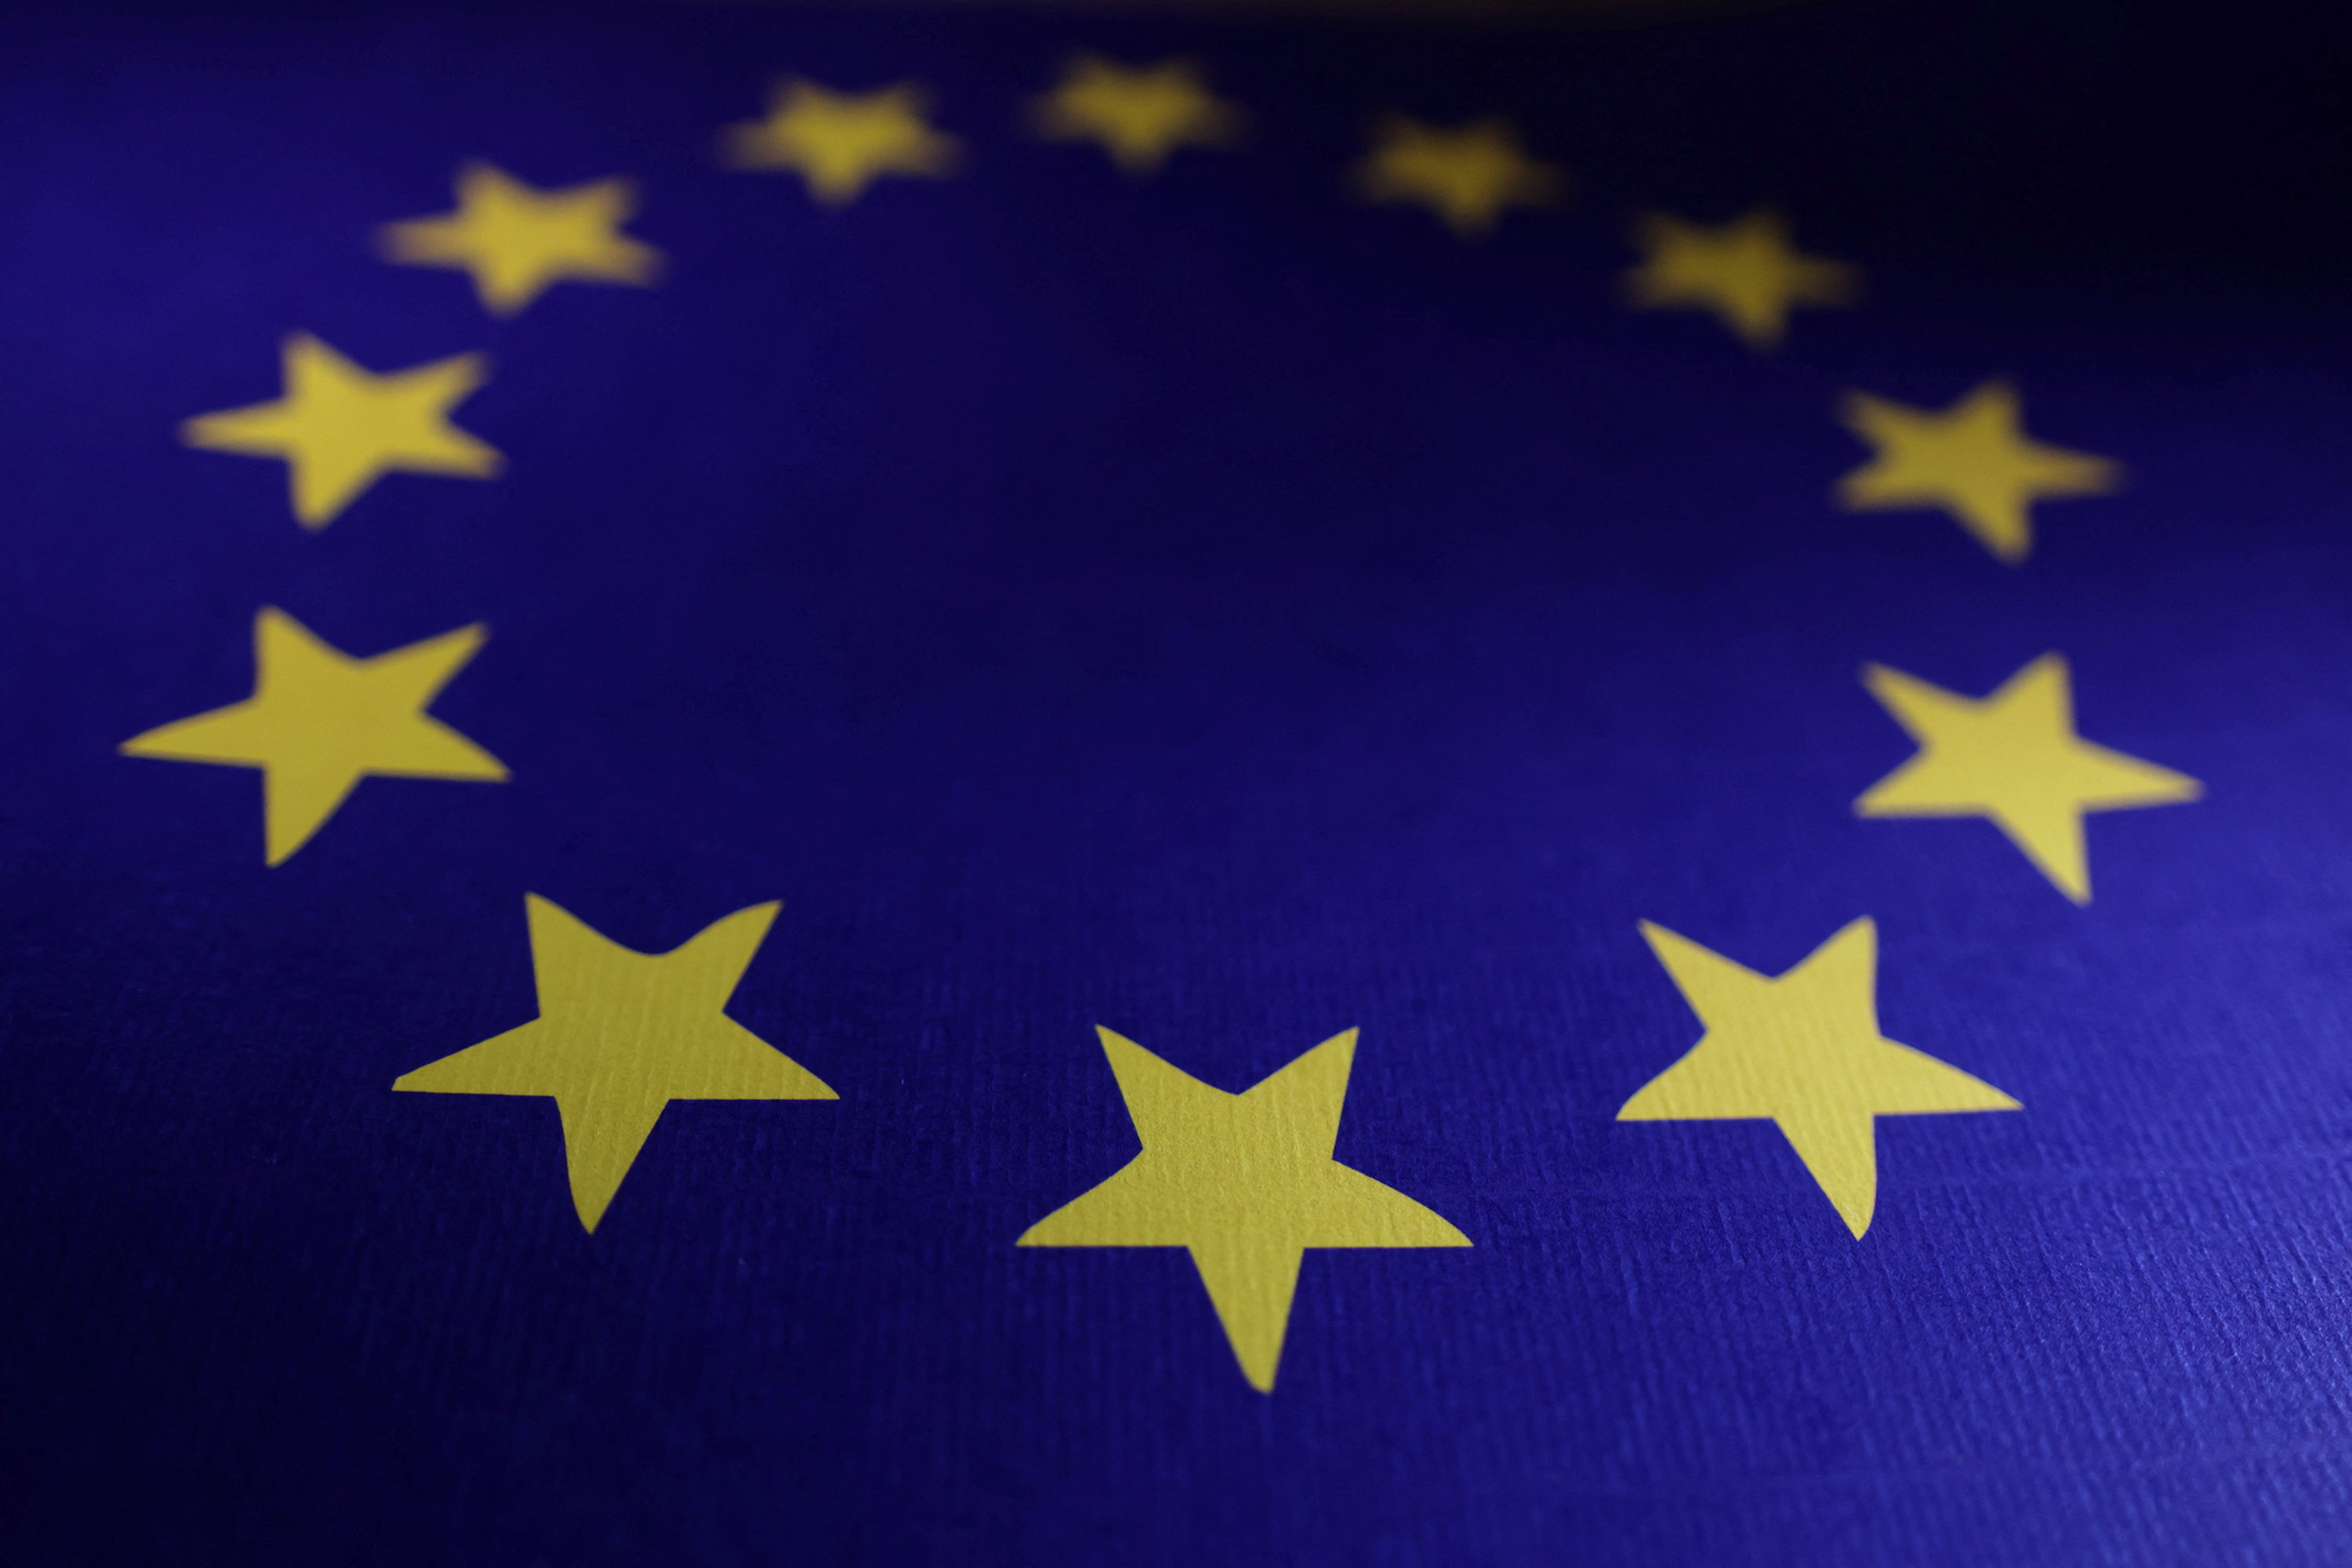 Illustration shows EU flag